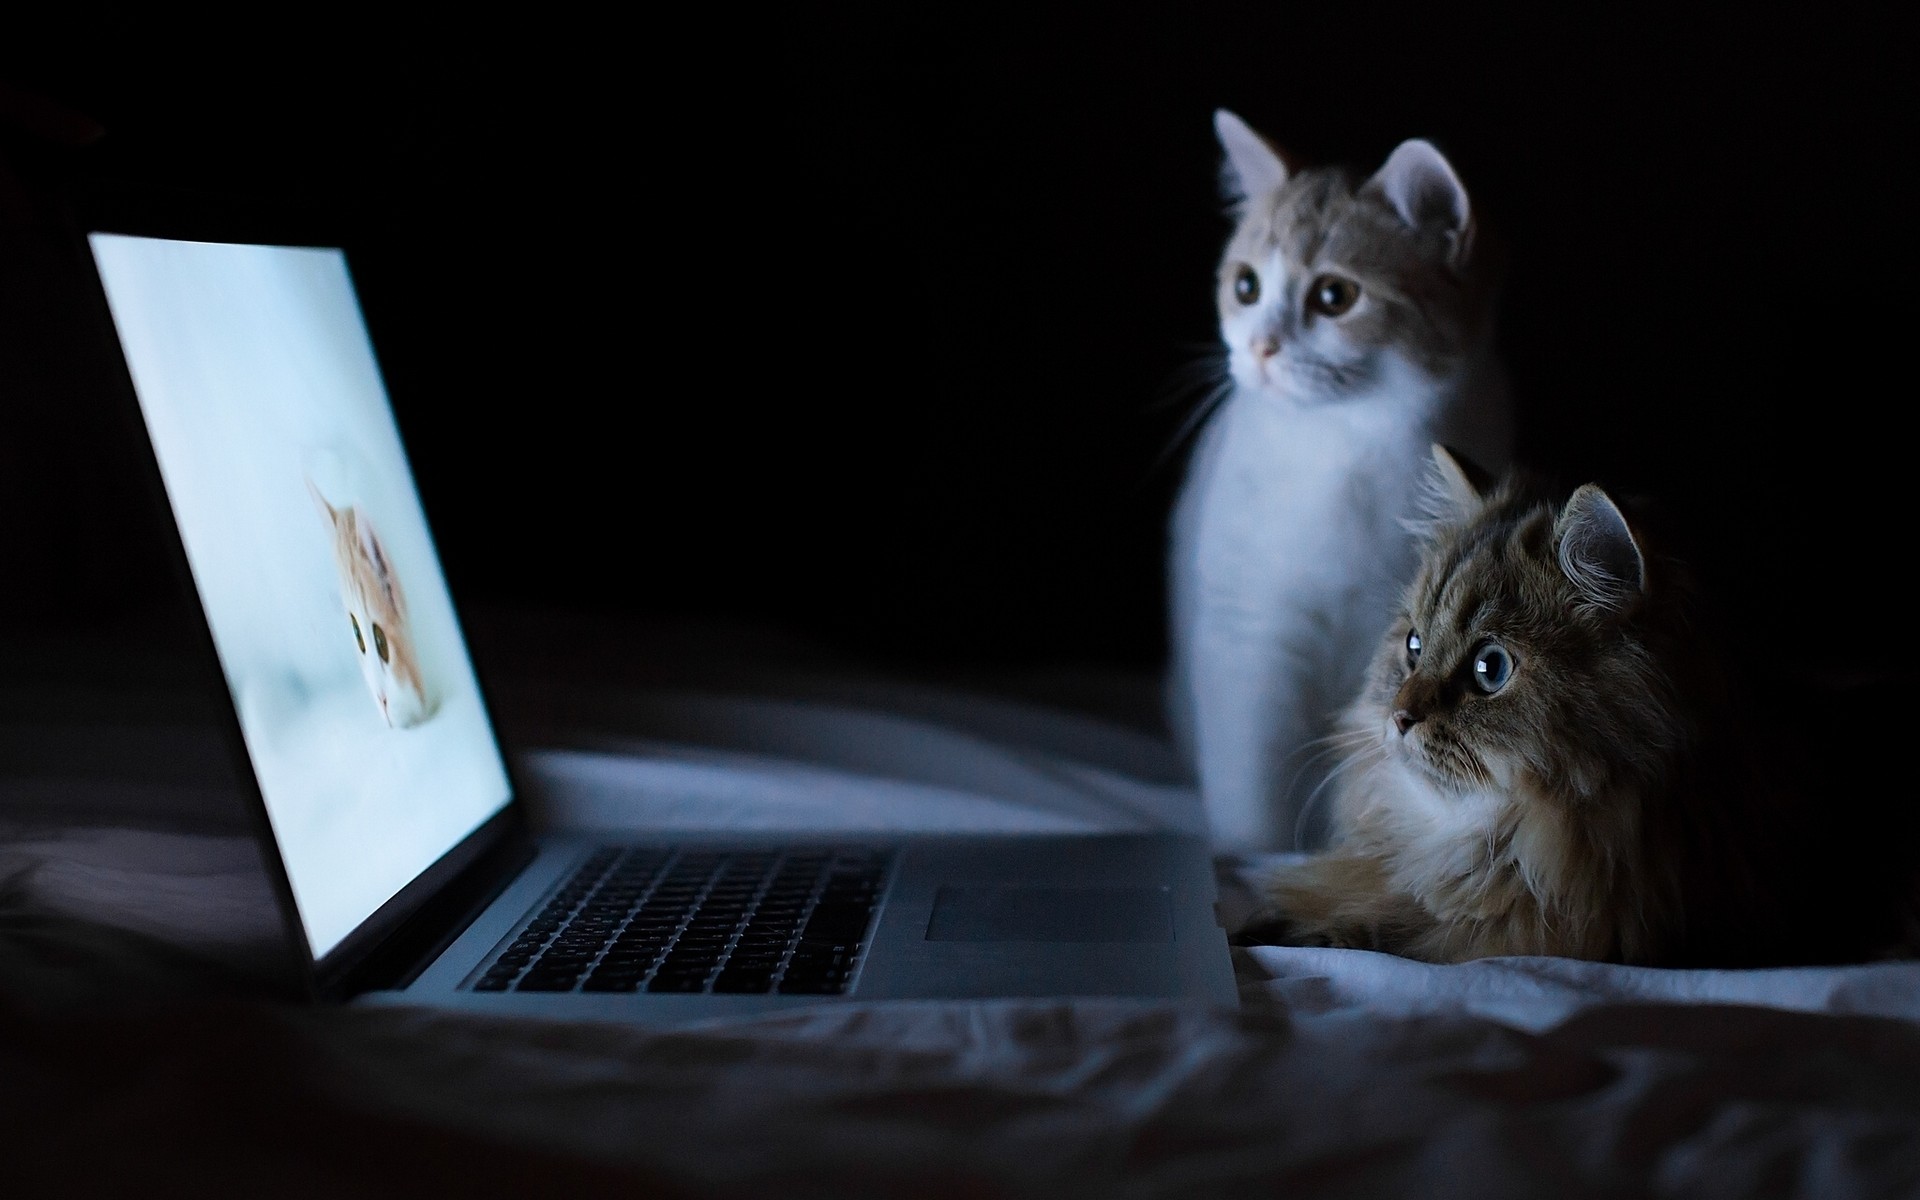 animals, Cats, Felines, Kittens, Cute, Computers, Laptops, Humor, Funny Wallpaper